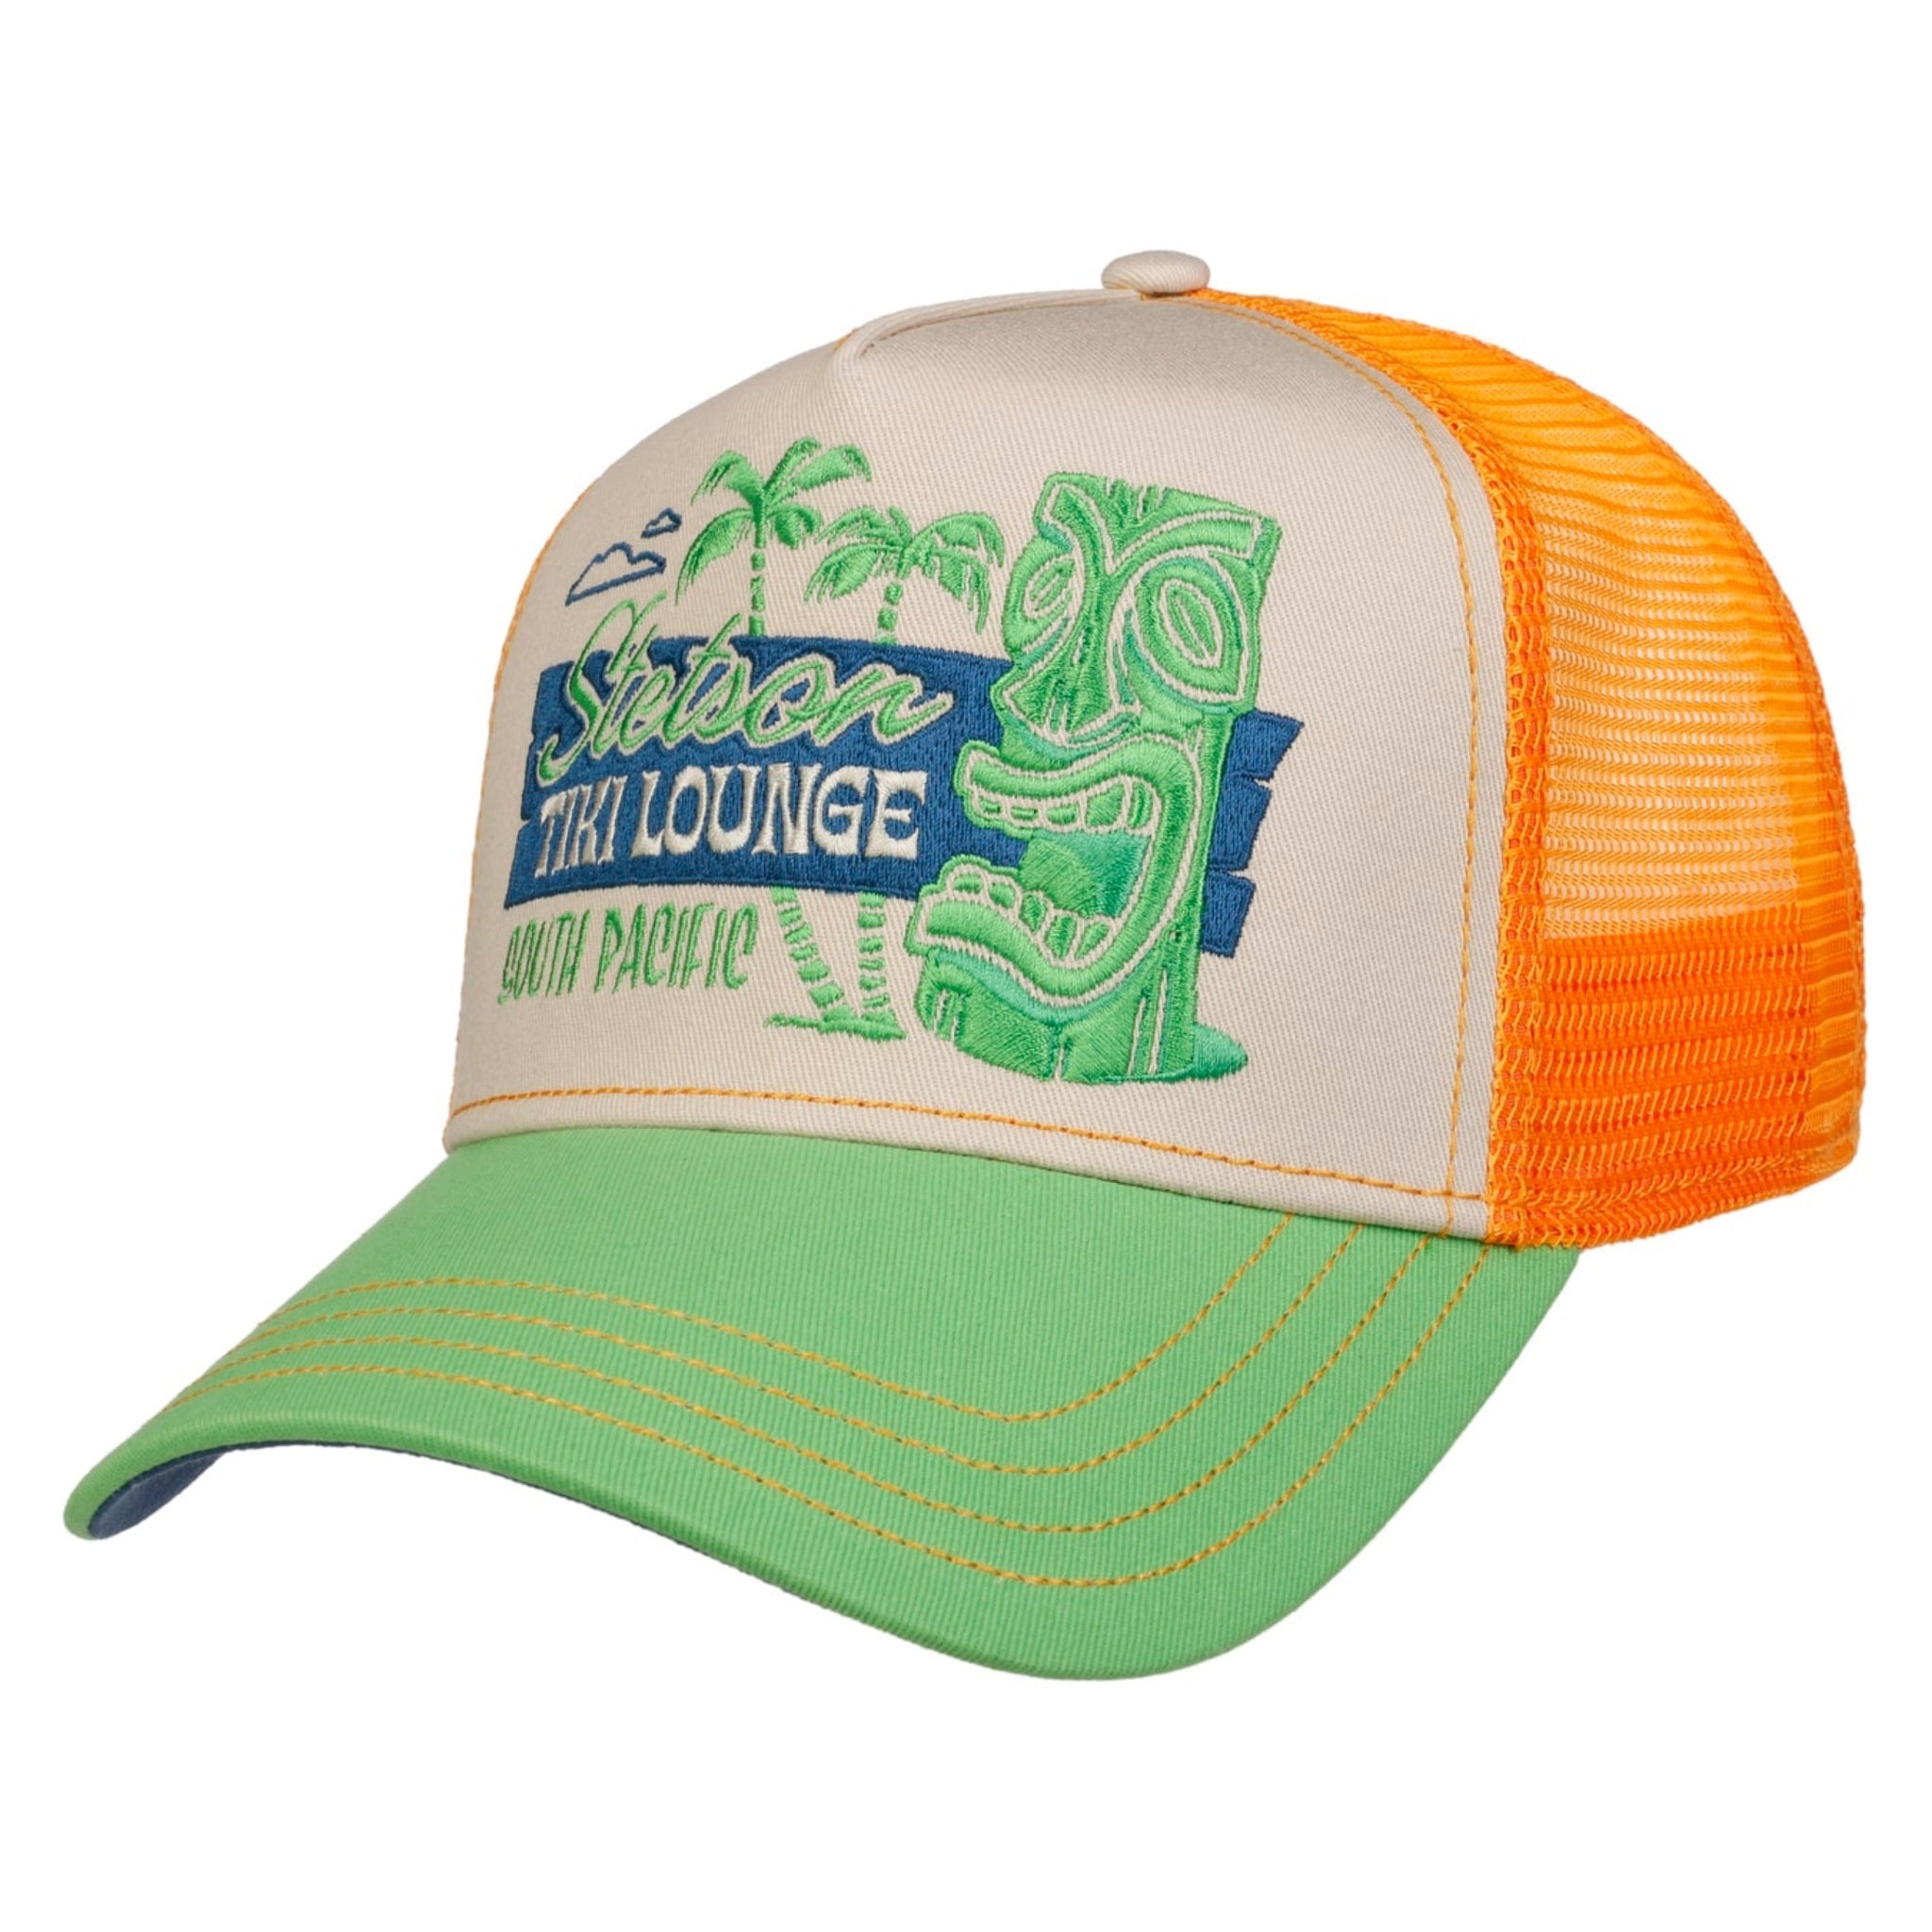 The Hat Shop Stetson Tiki Lounge Trucker Cap 'Orange"